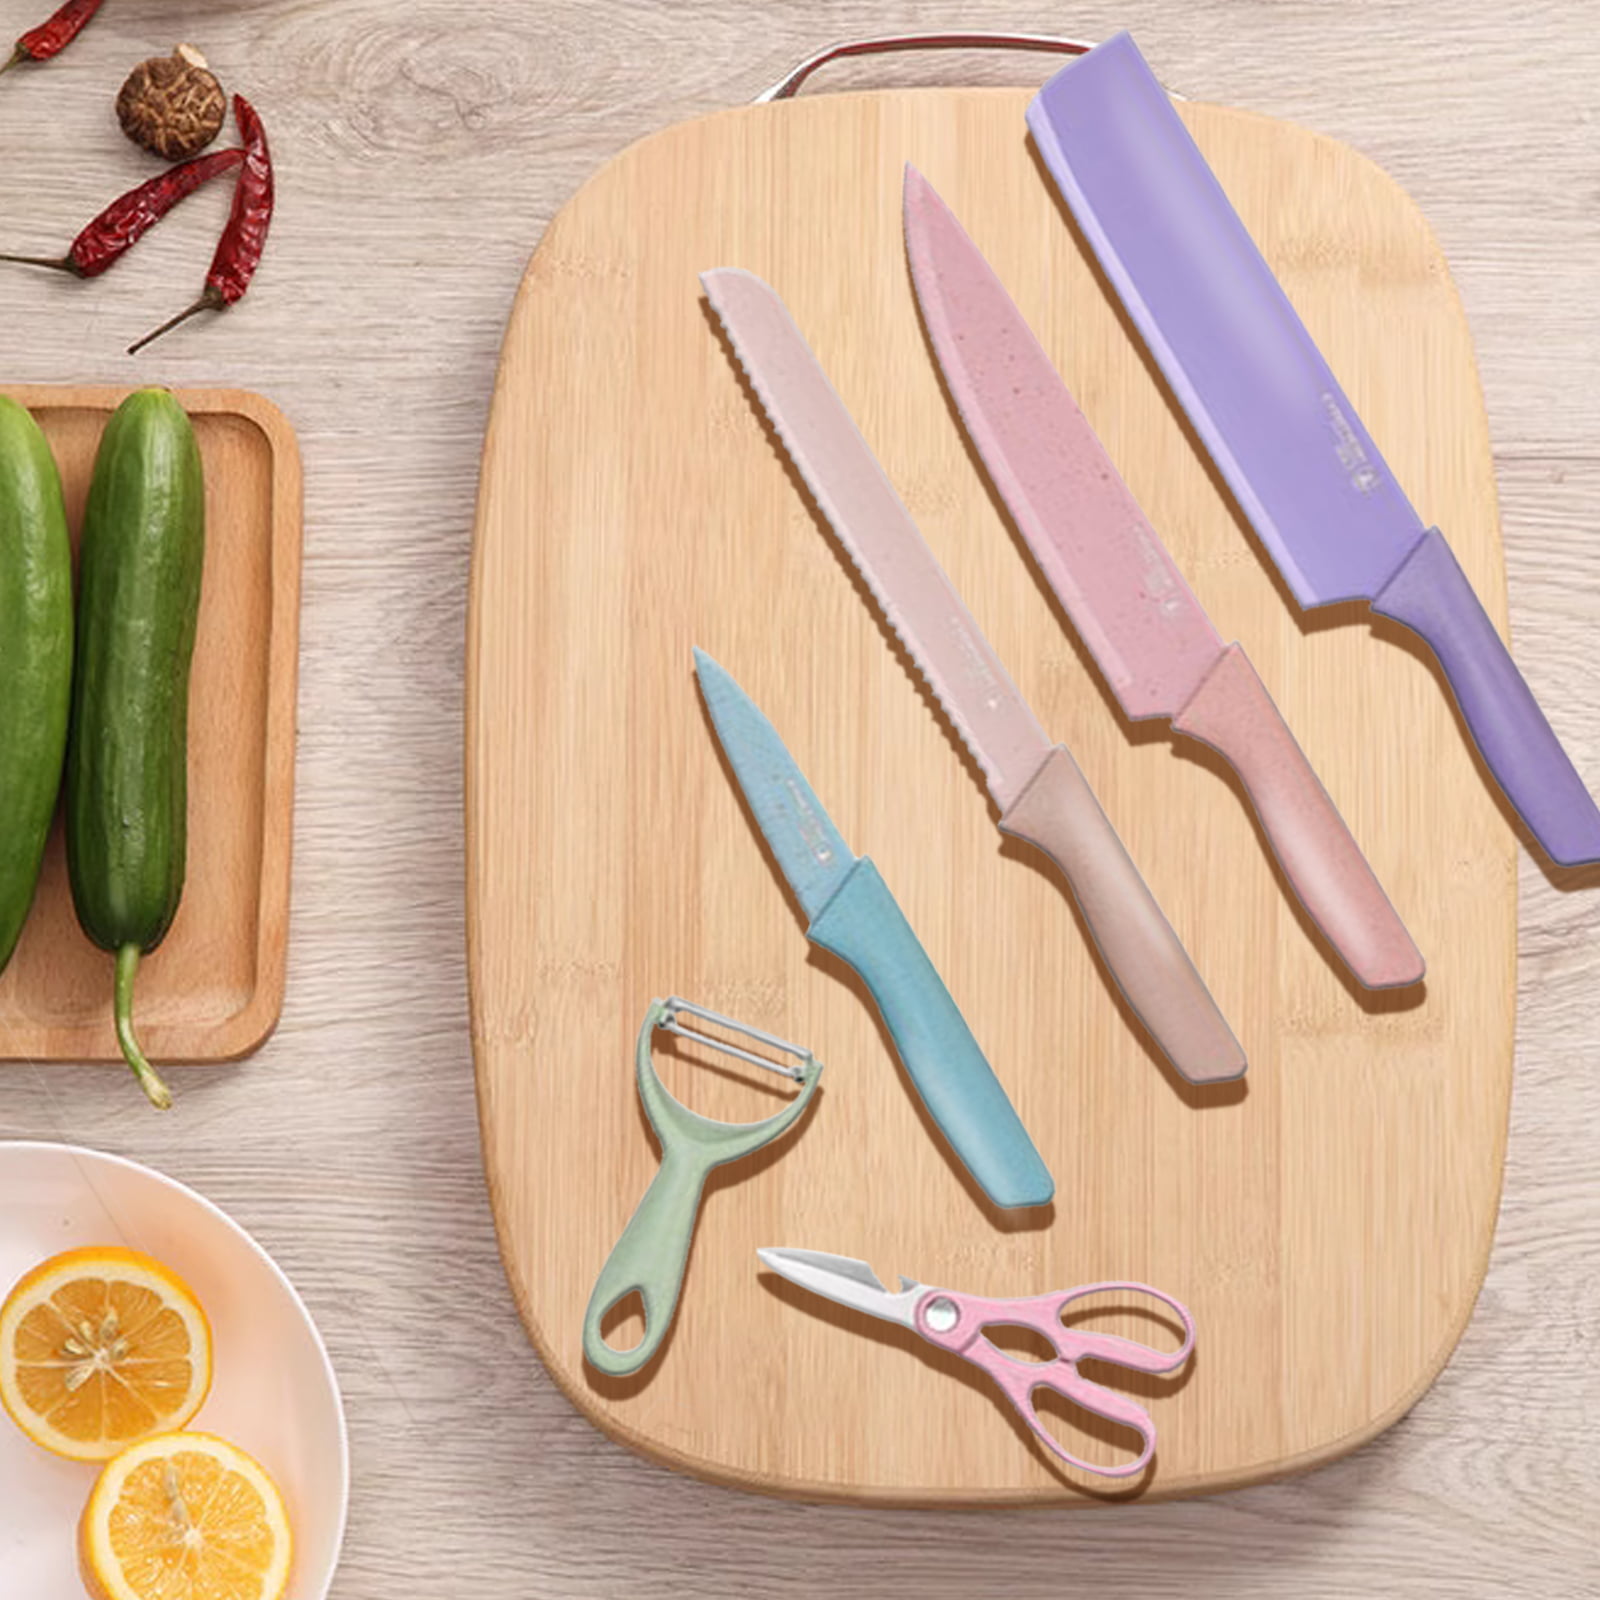 6 Piece Knife Set Assorted Colours Pink / Blue 6702 (Parcel Rate